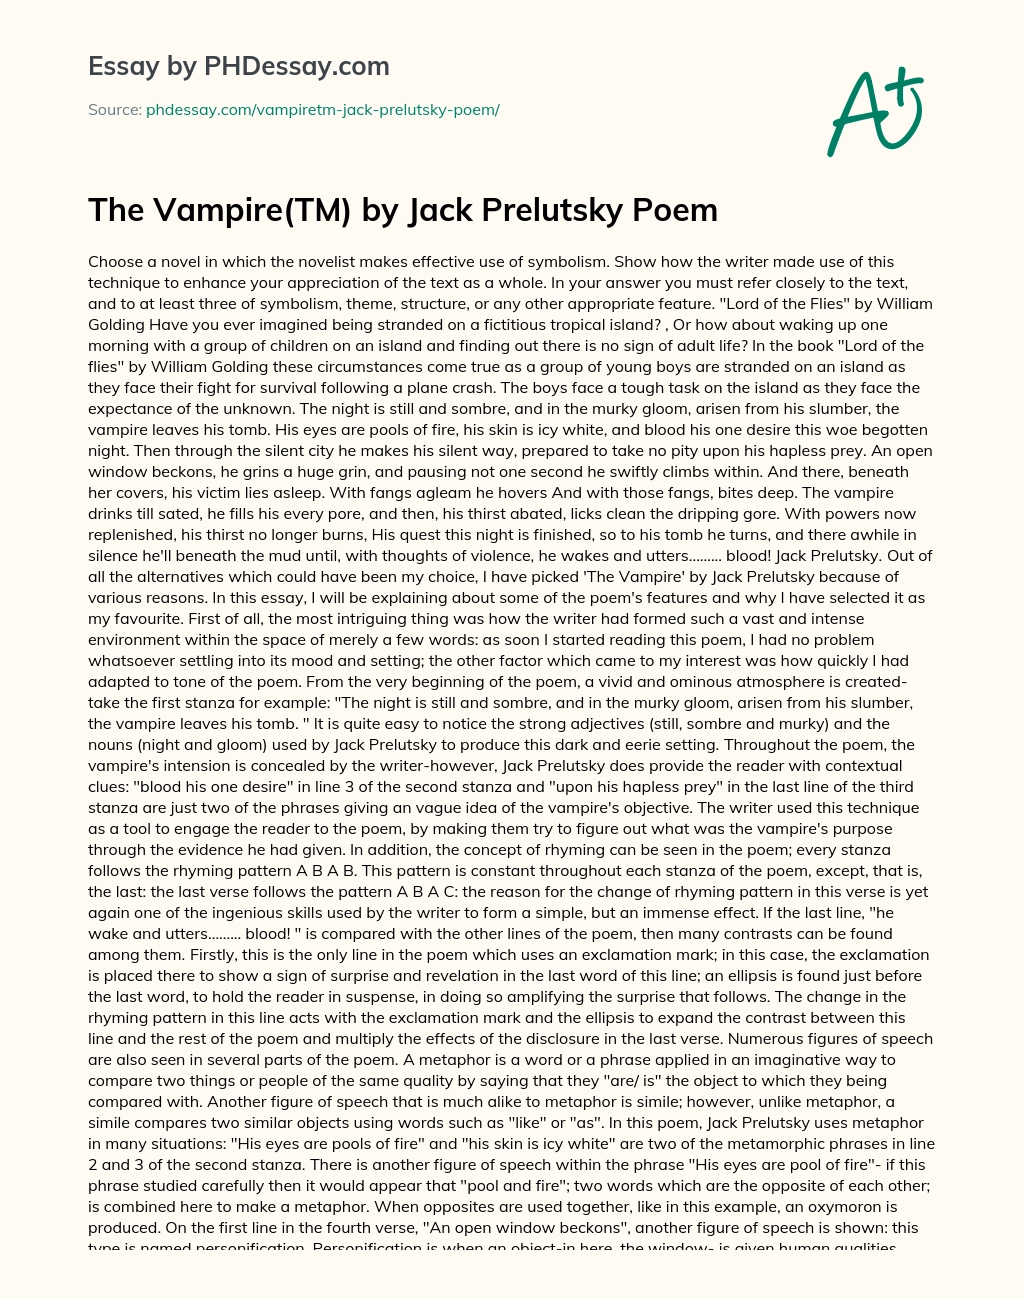 The Vampire(TM) by Jack Prelutsky Poem essay